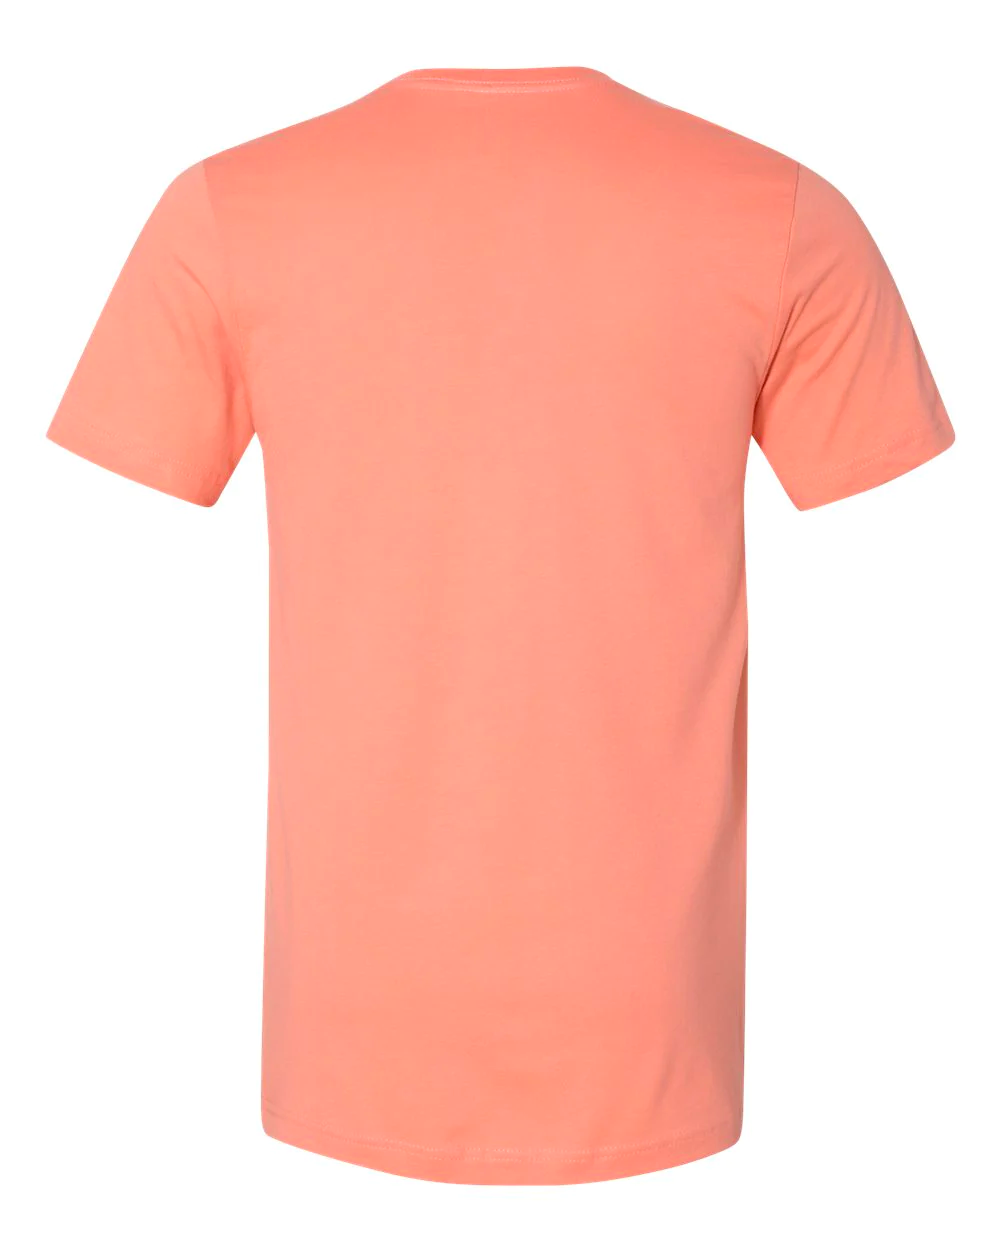 Blessed Short Sleeve T-Shirt (Sunset Peach)